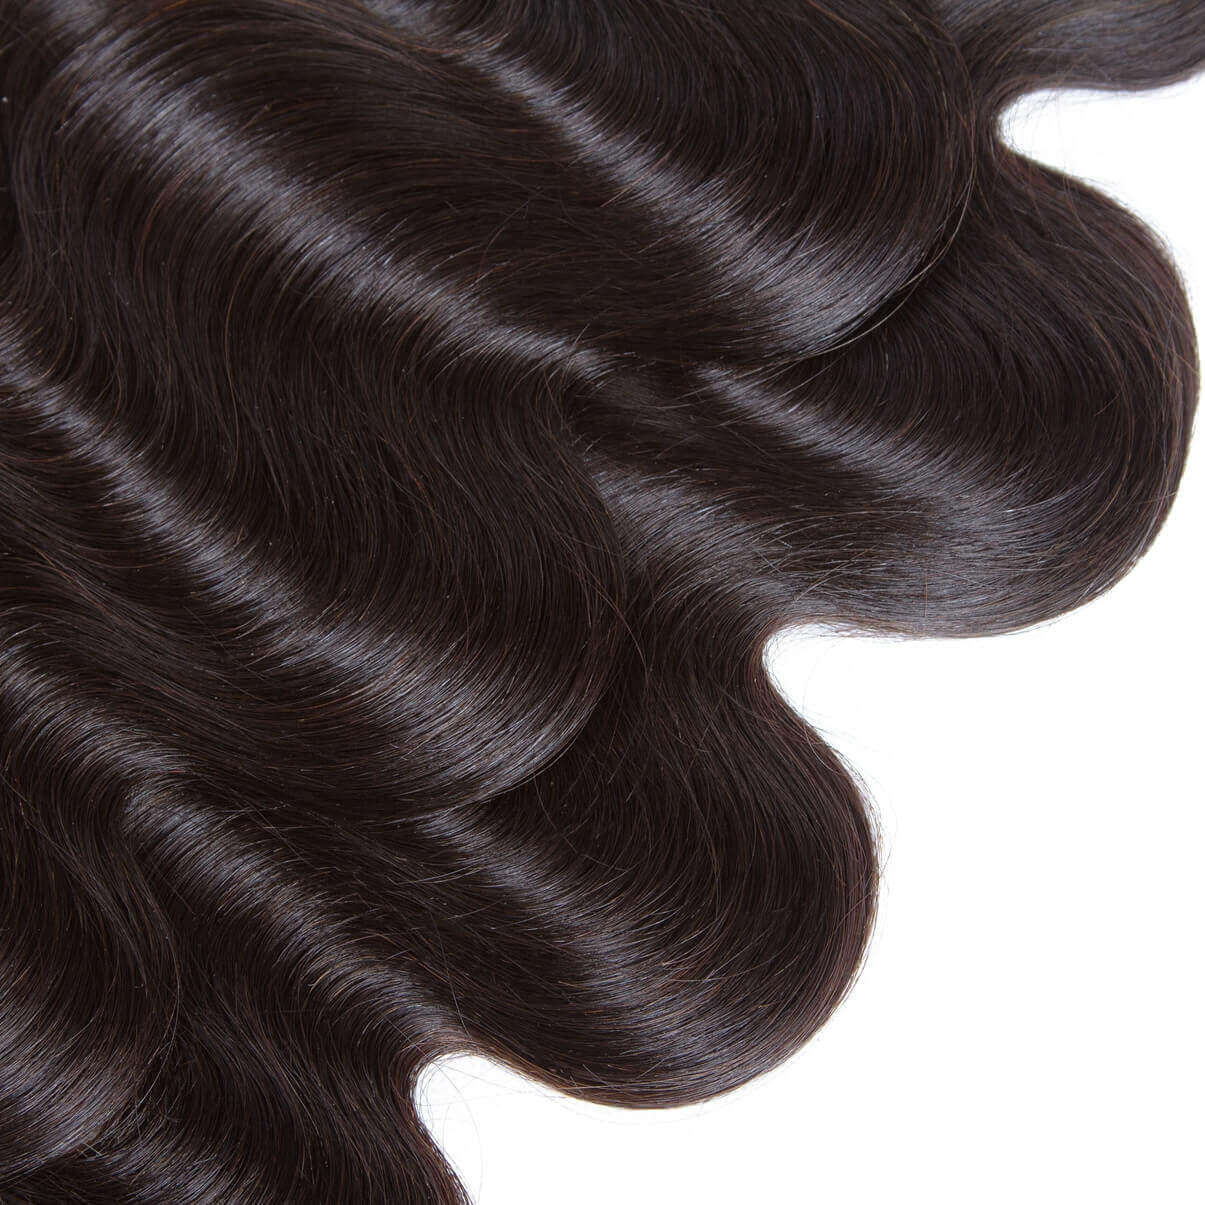 Lakihair Brazilian Body Wave Human Hair Weaving 3 Bundles Unprocessed Virgin Human Hair Extensions